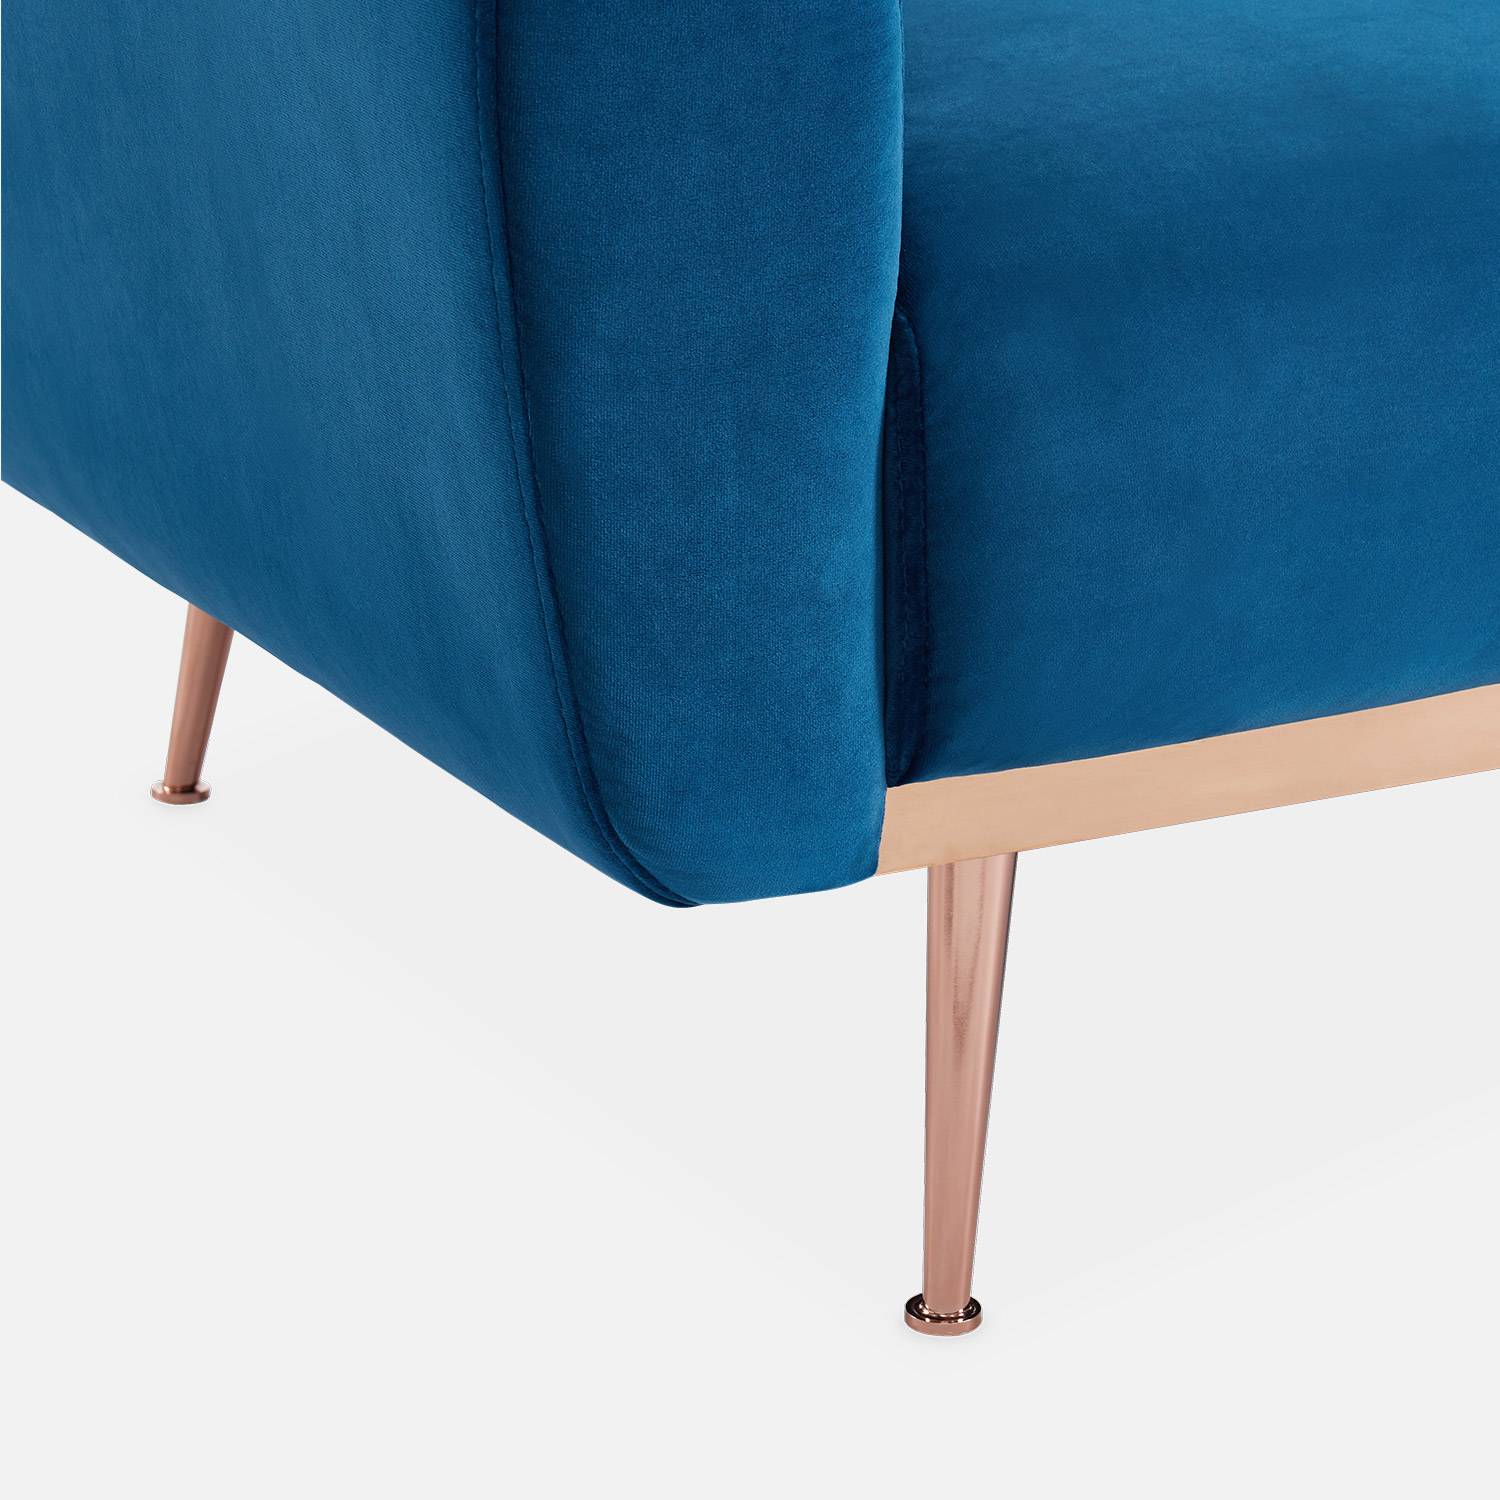 Design Sofa ausziehbar aus Samt - Oskar - 2 - 3 Sitzer skandinavischischer Stil mit dünnen roségoldenen Beinen Photo7